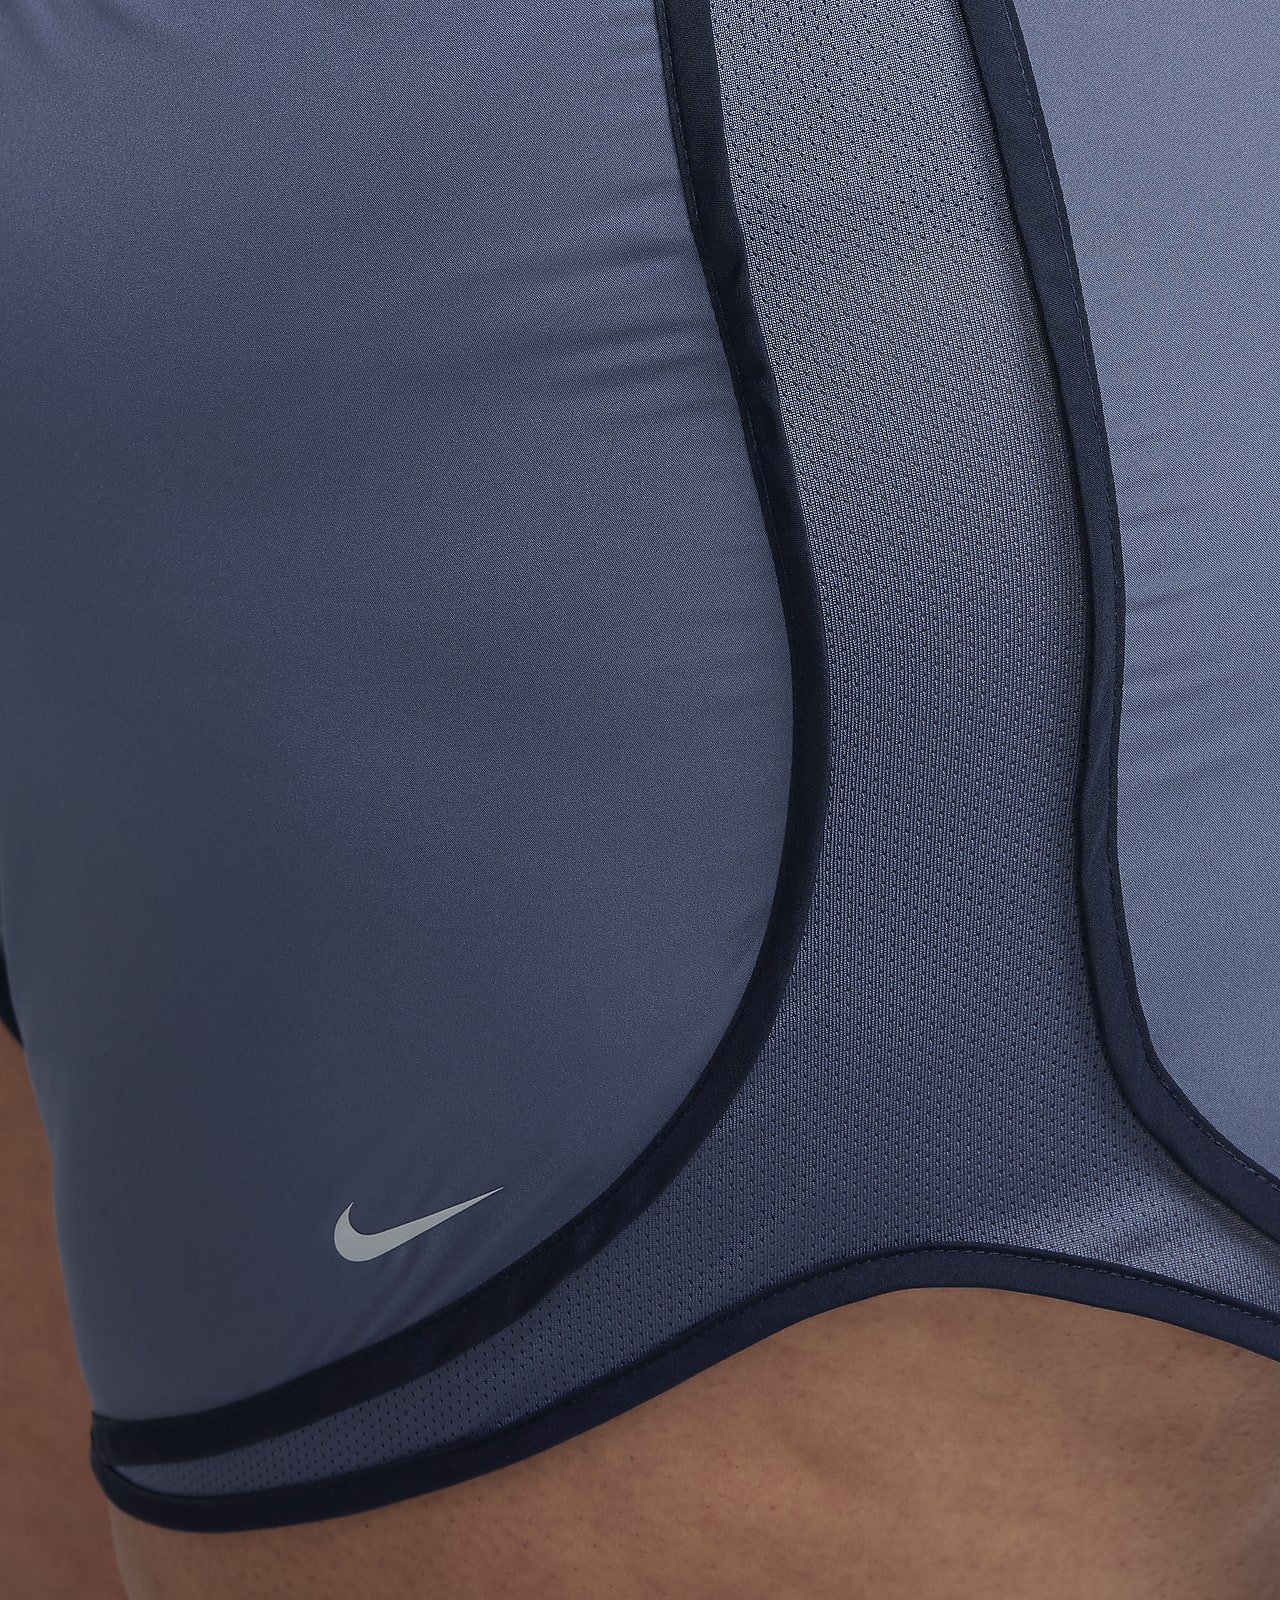 Nike Women's Sports Shorts (Plus Size)